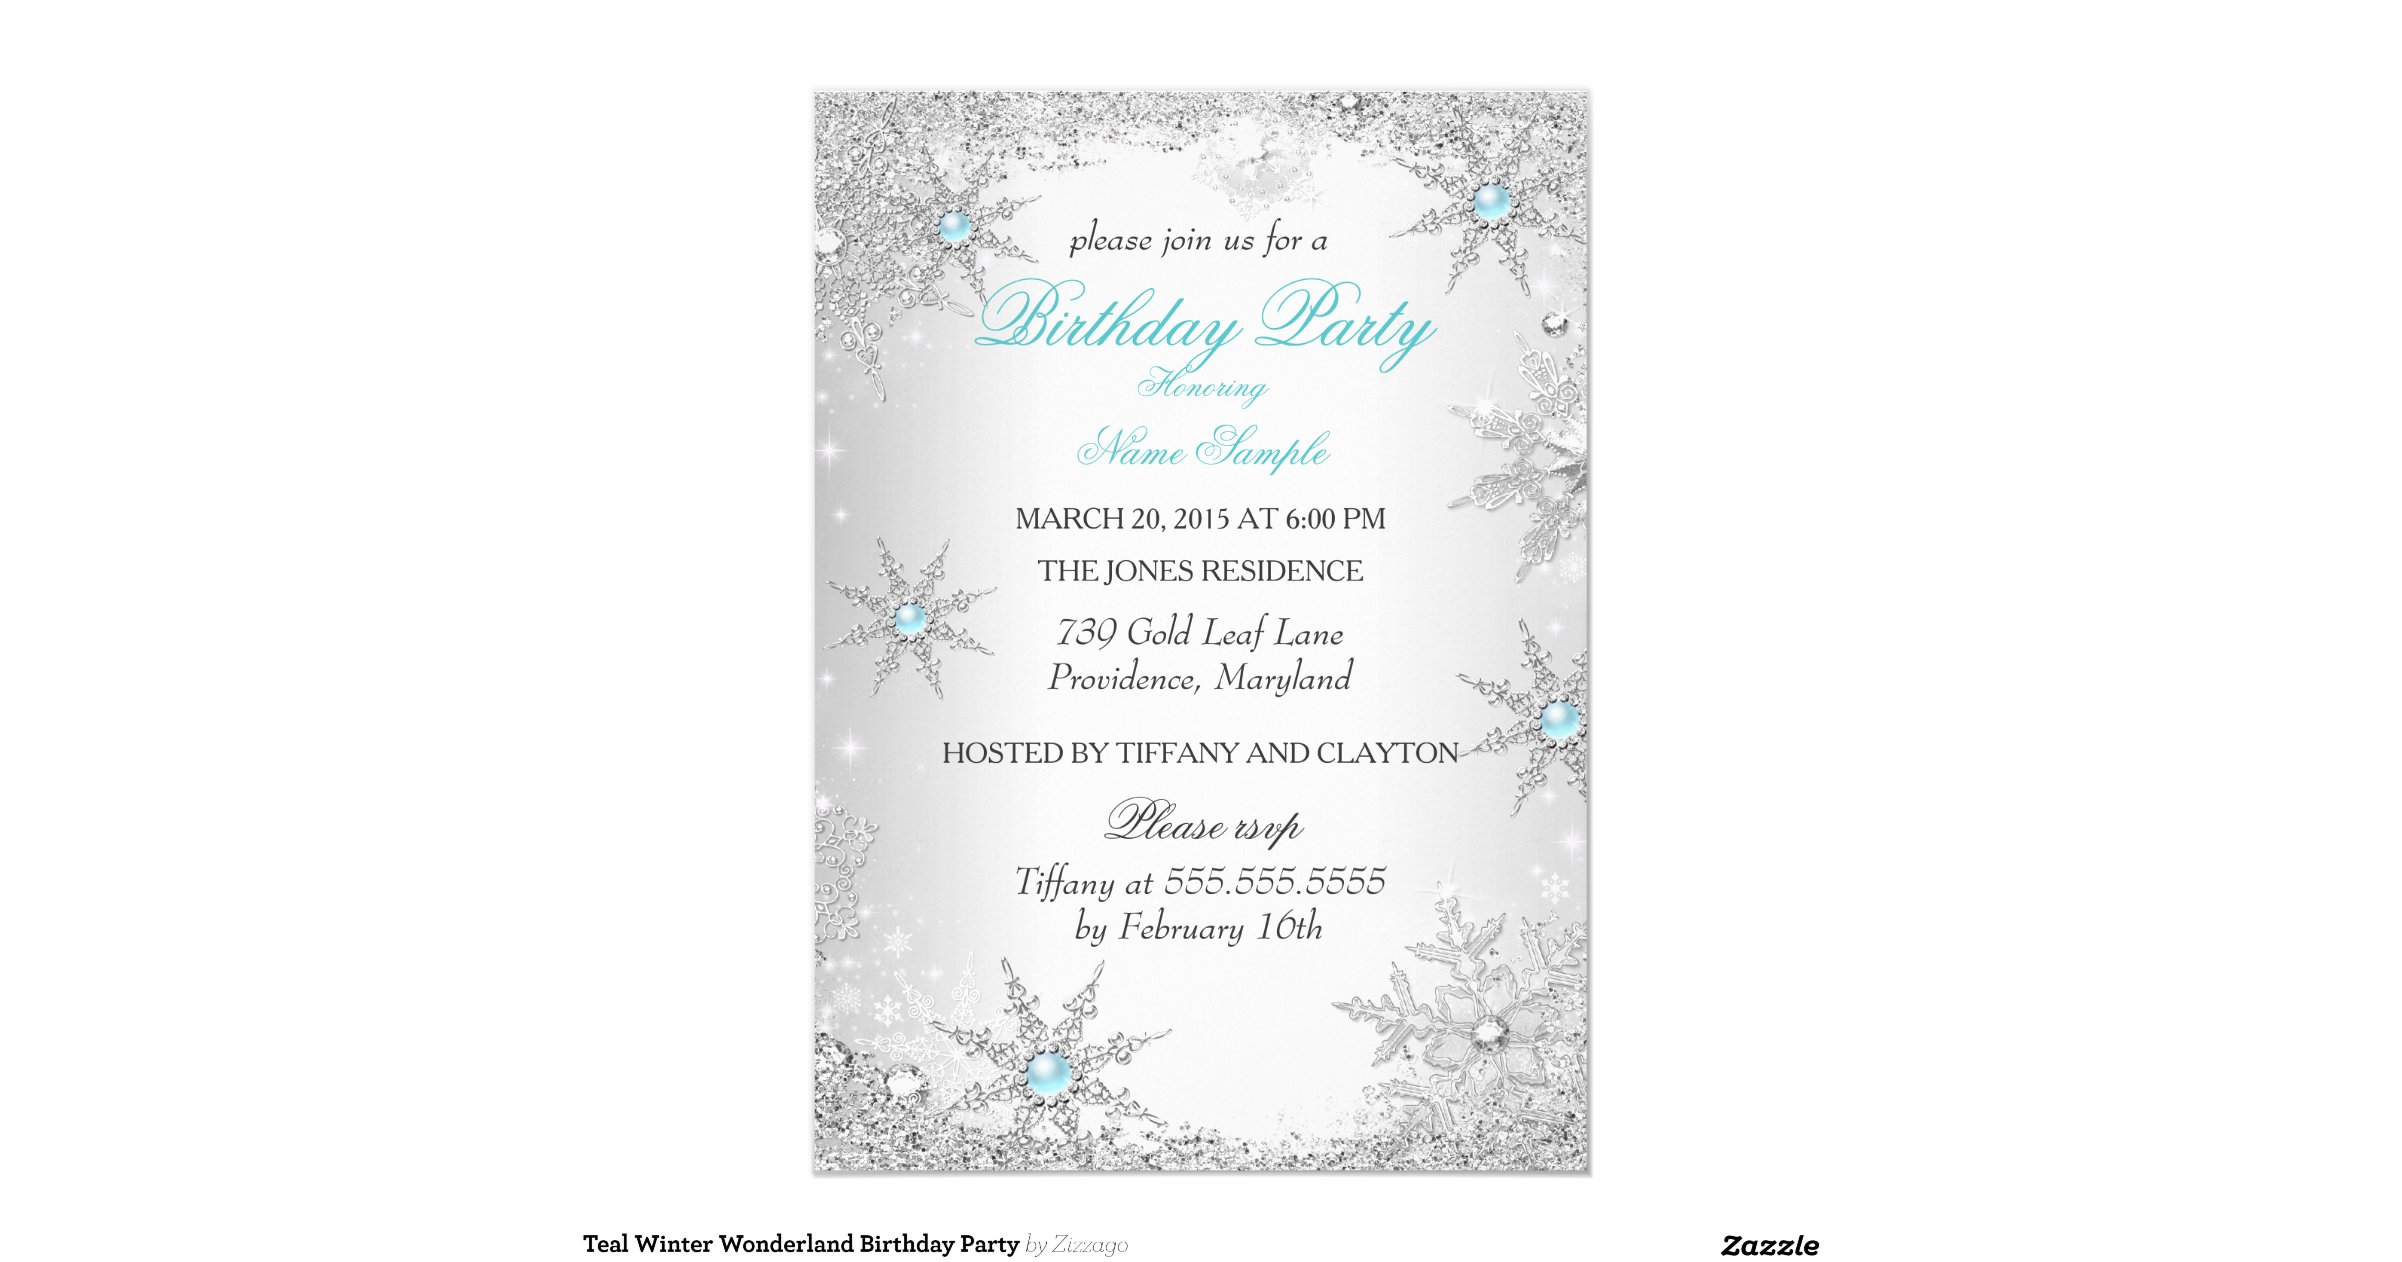 Teal Winter Wonderland Birthday Party 5x7 Paper Invitation Card Zazzle